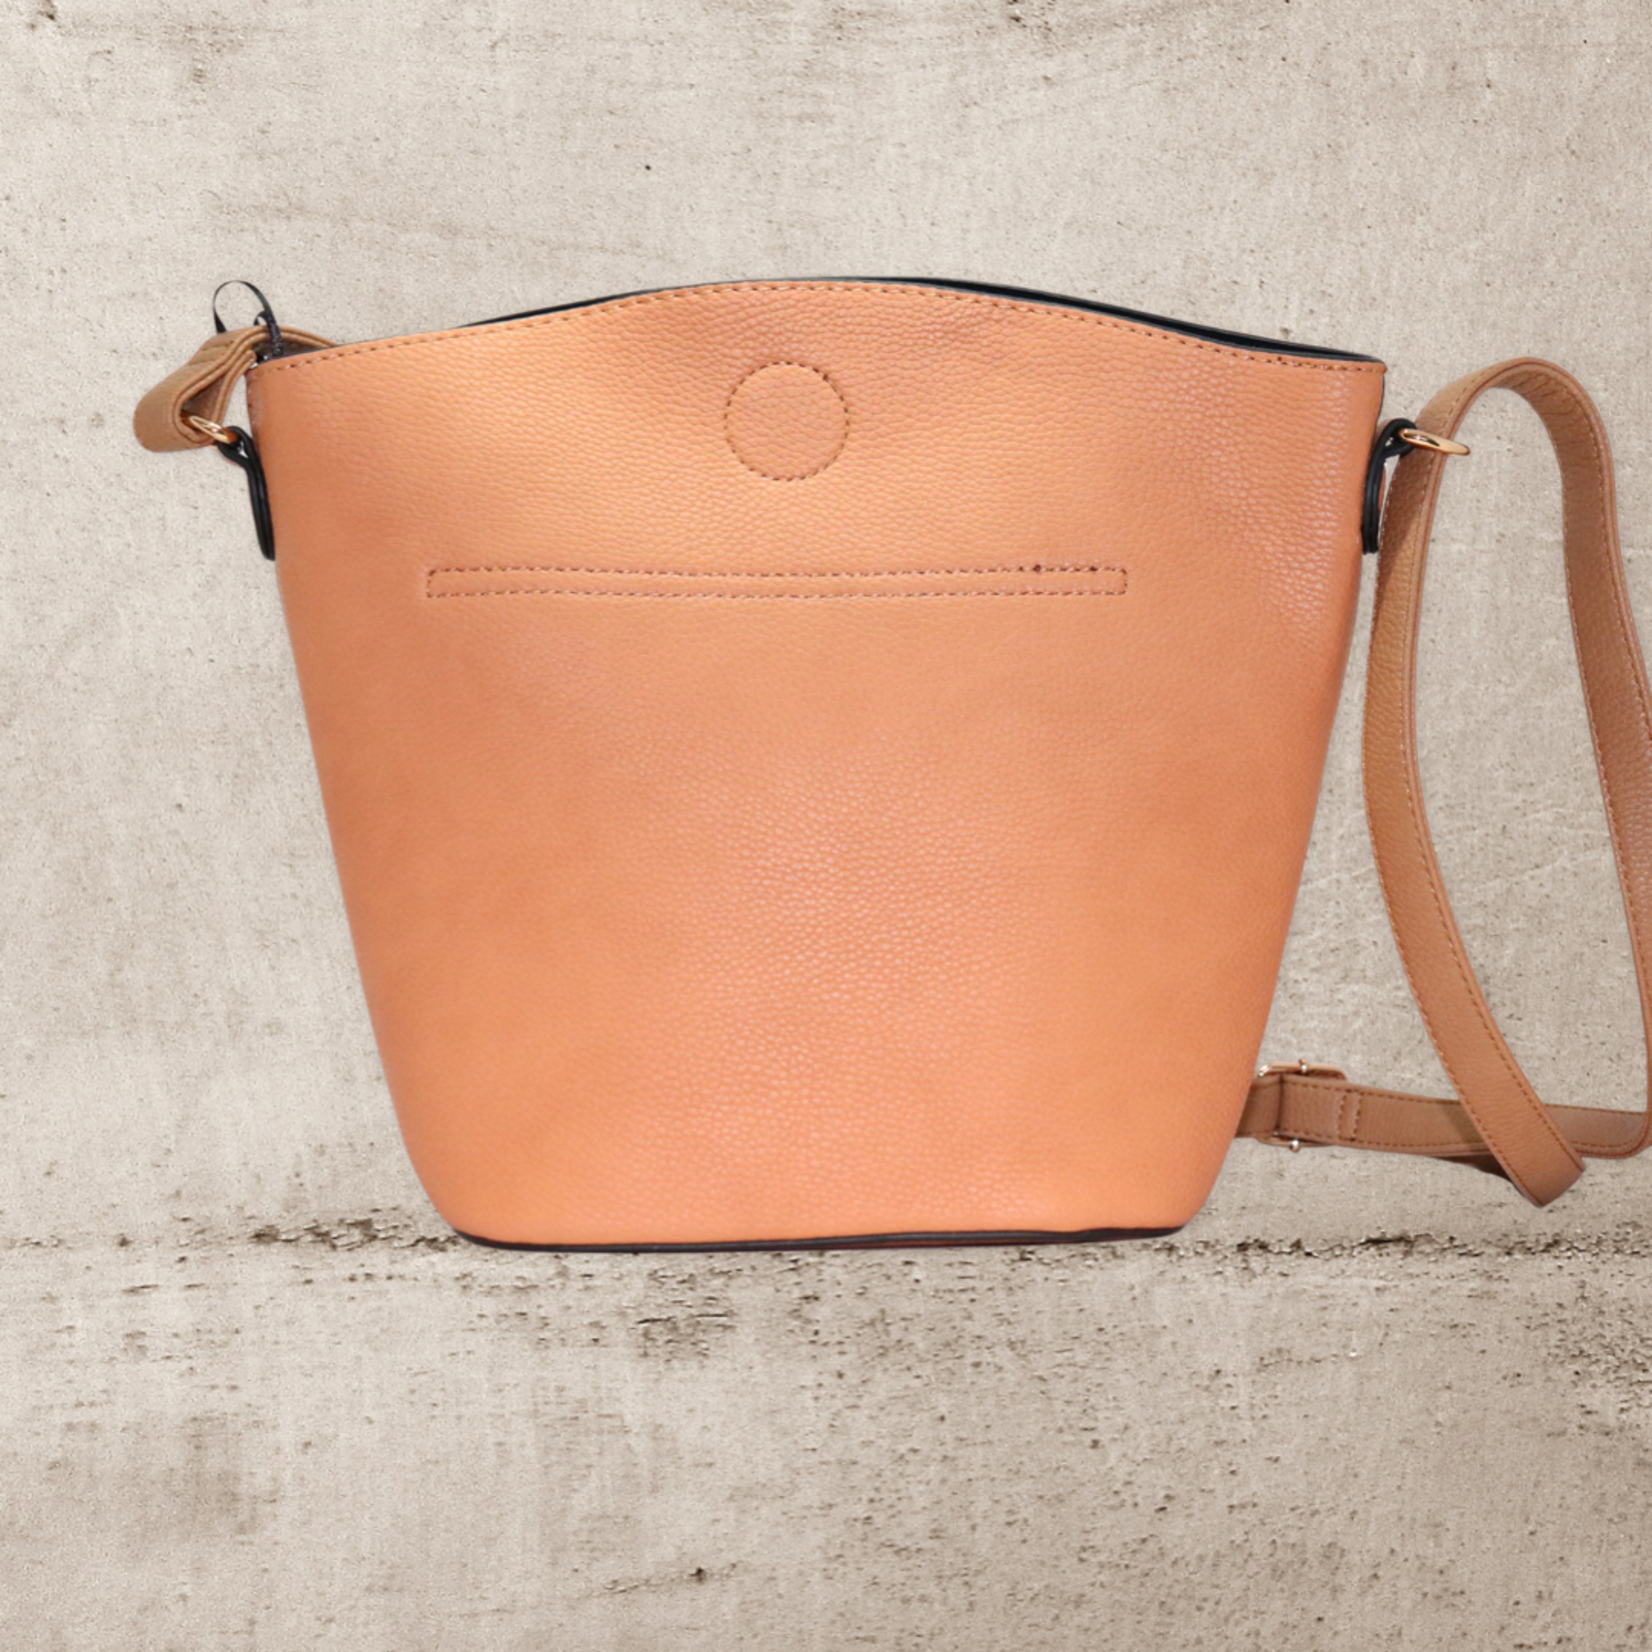 Jendi Coral & Tan with Side Pocket Large Handbag